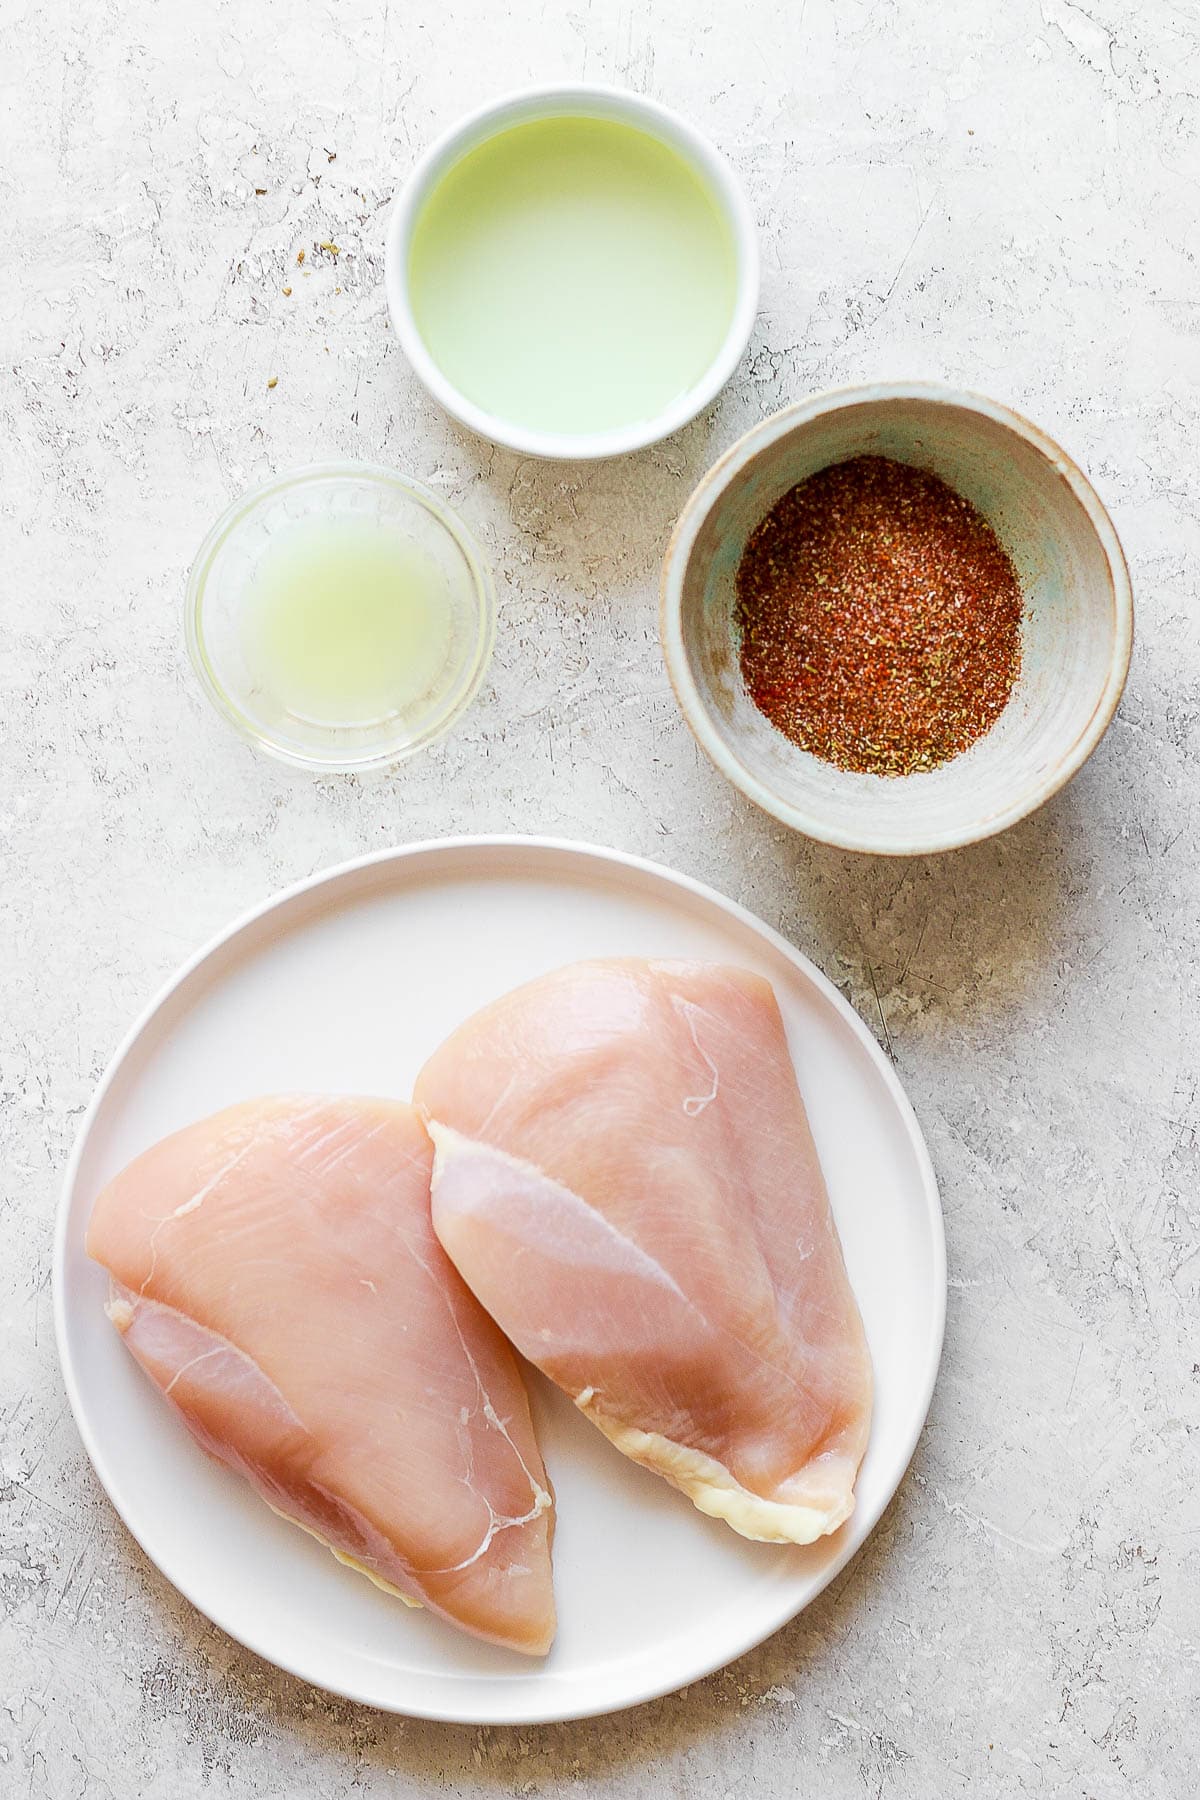 Chicken breasts and chicken fajita marinade ingredients in separate bowls.